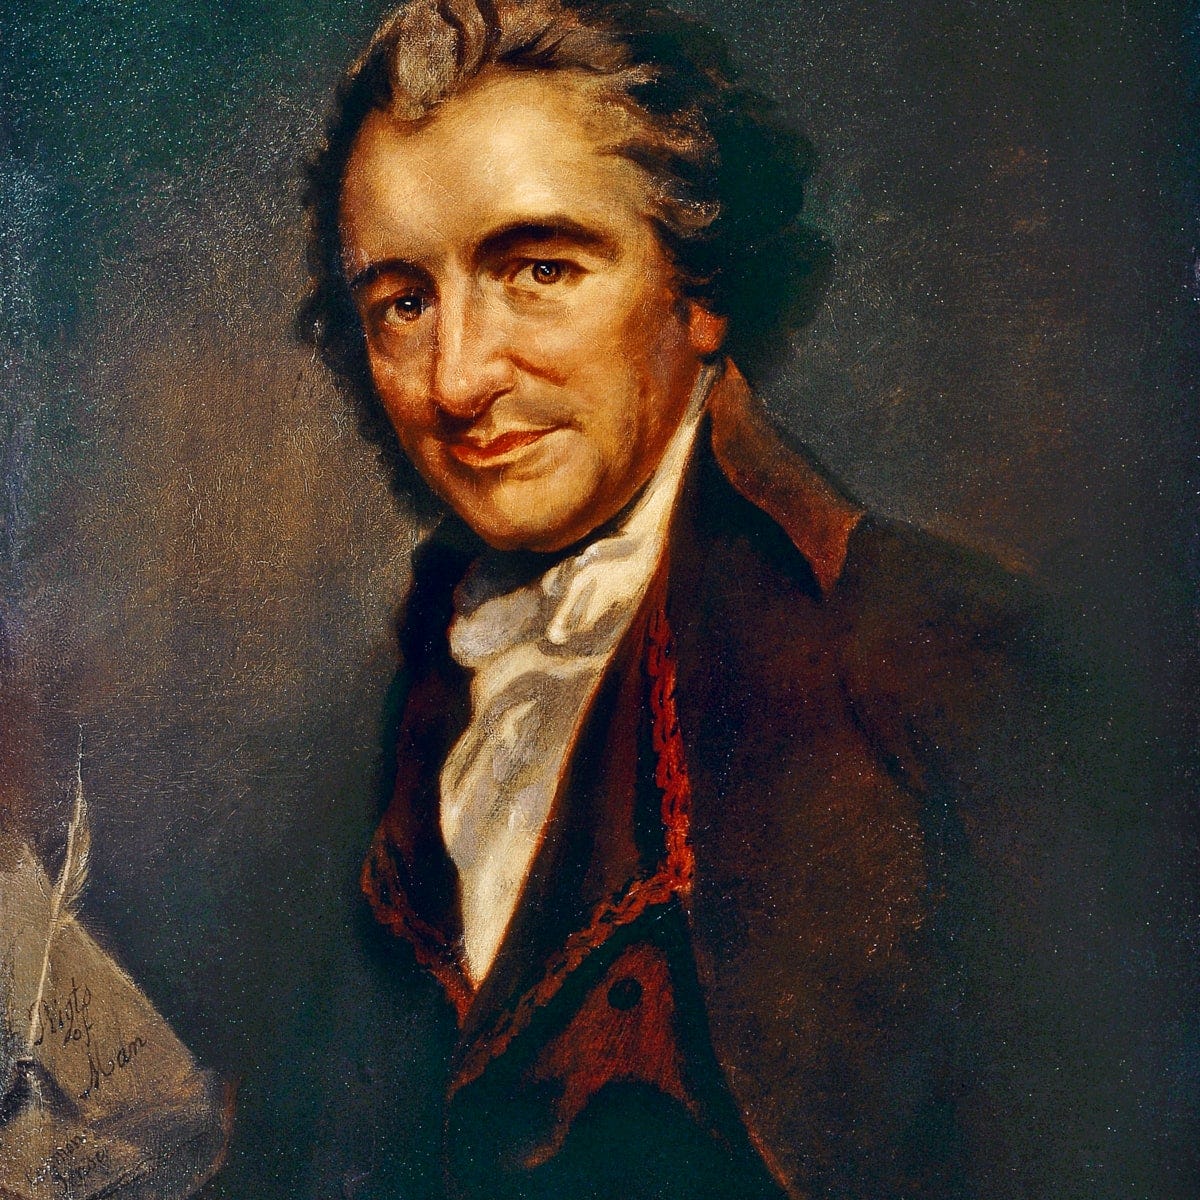 Thomas Paine - HISTORY